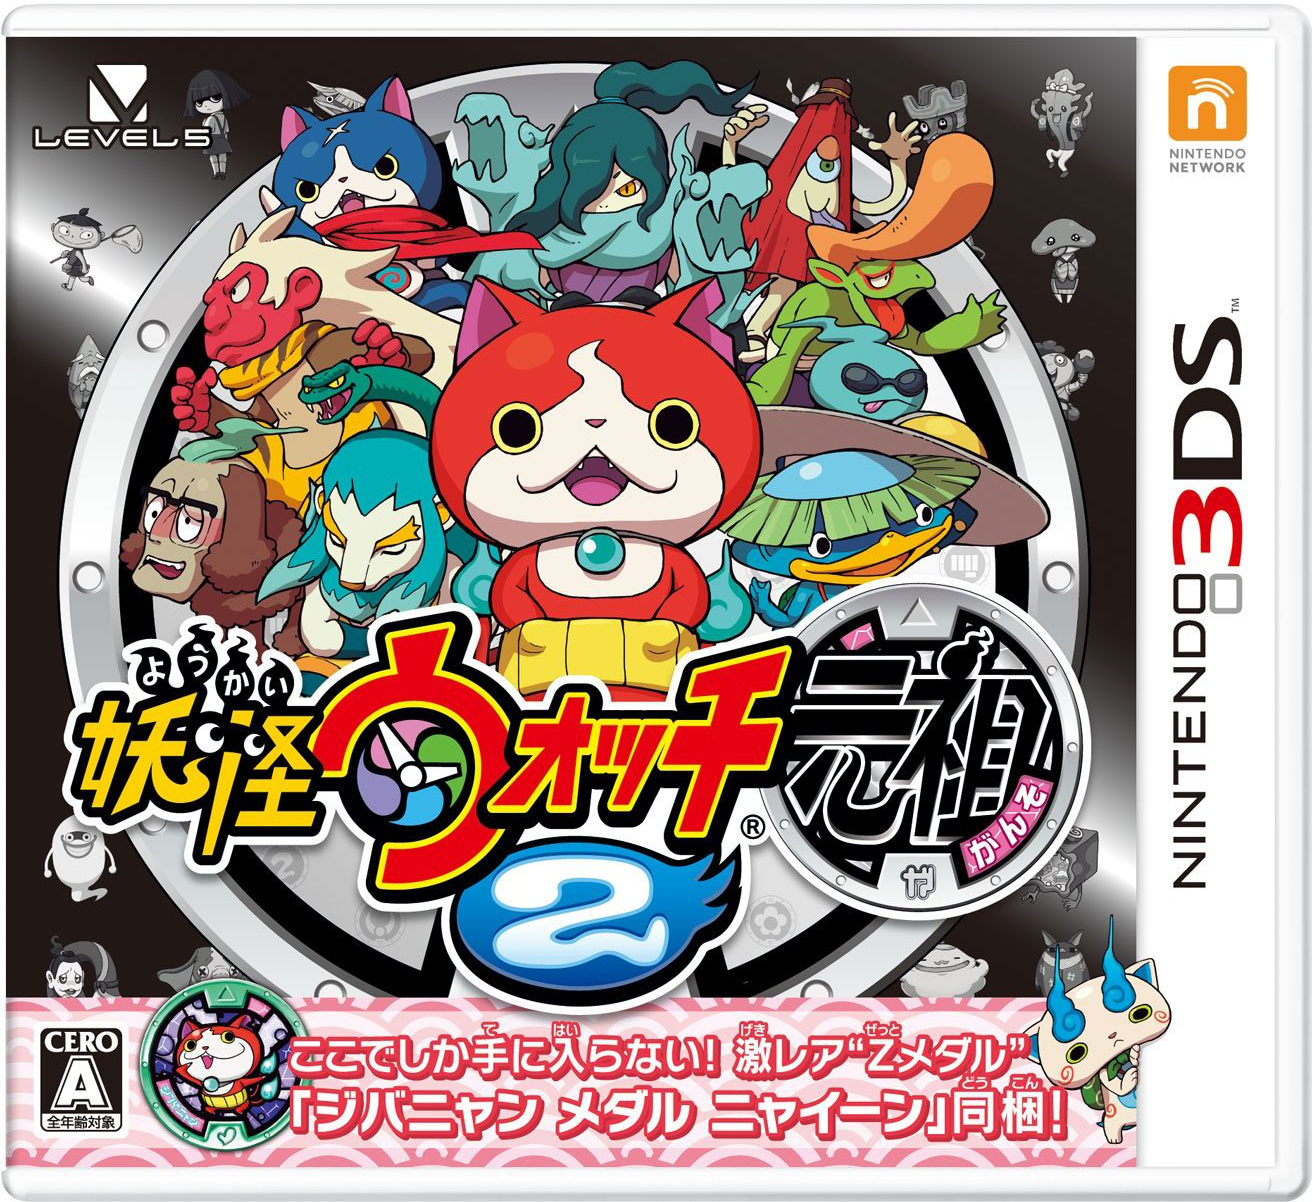  YO-KAI WATCH 2: Bony Spirits - Nintendo 3DS : Video Games